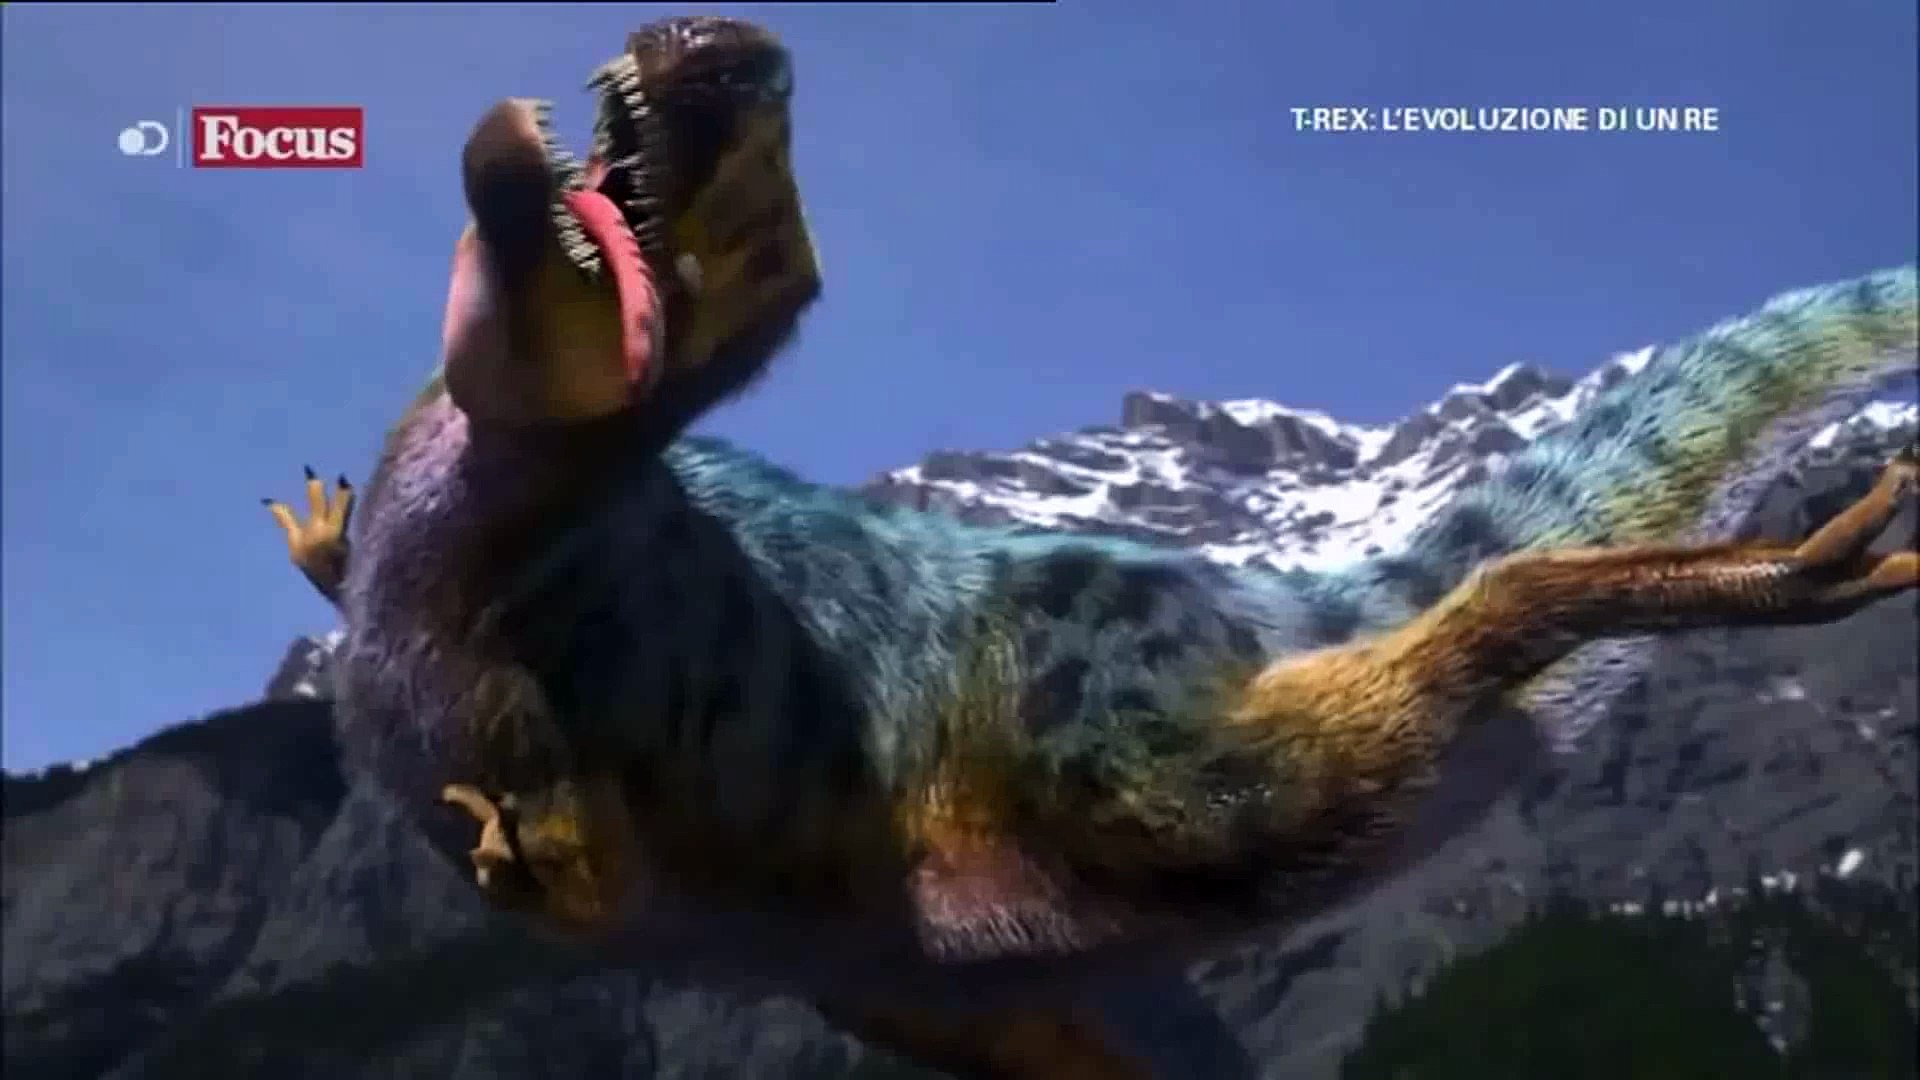 T - Rex L'evoluzione di un Re (Documentario Focus) - Video Dailymotion